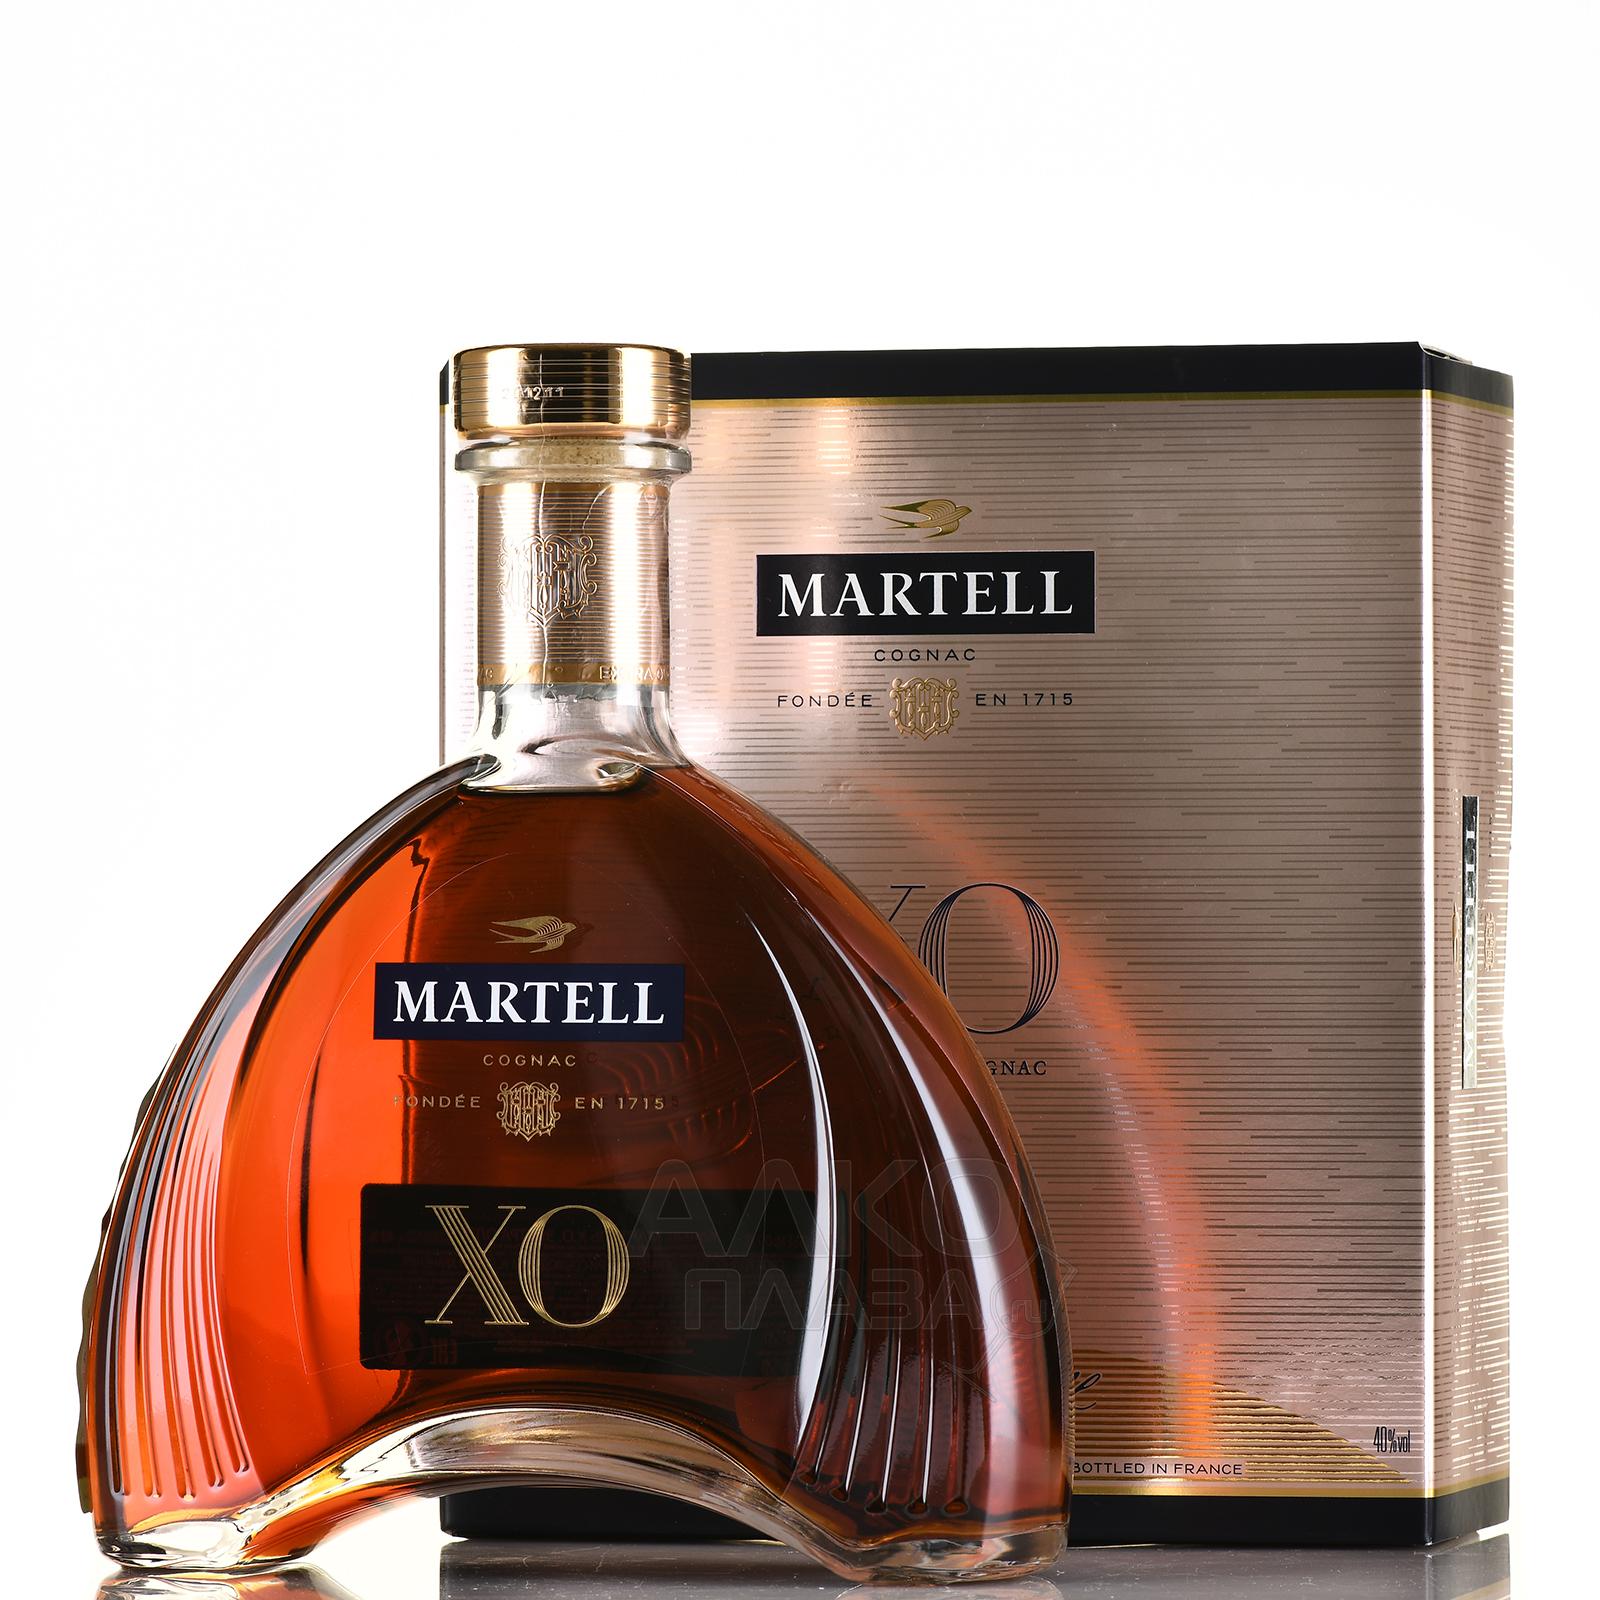 Martell коньяк купить. Мартель Хо 0.7 коробка. Французские коньяки Мартель Хо. Коньяк Martell XO. Martell XO Cognac 0.7.